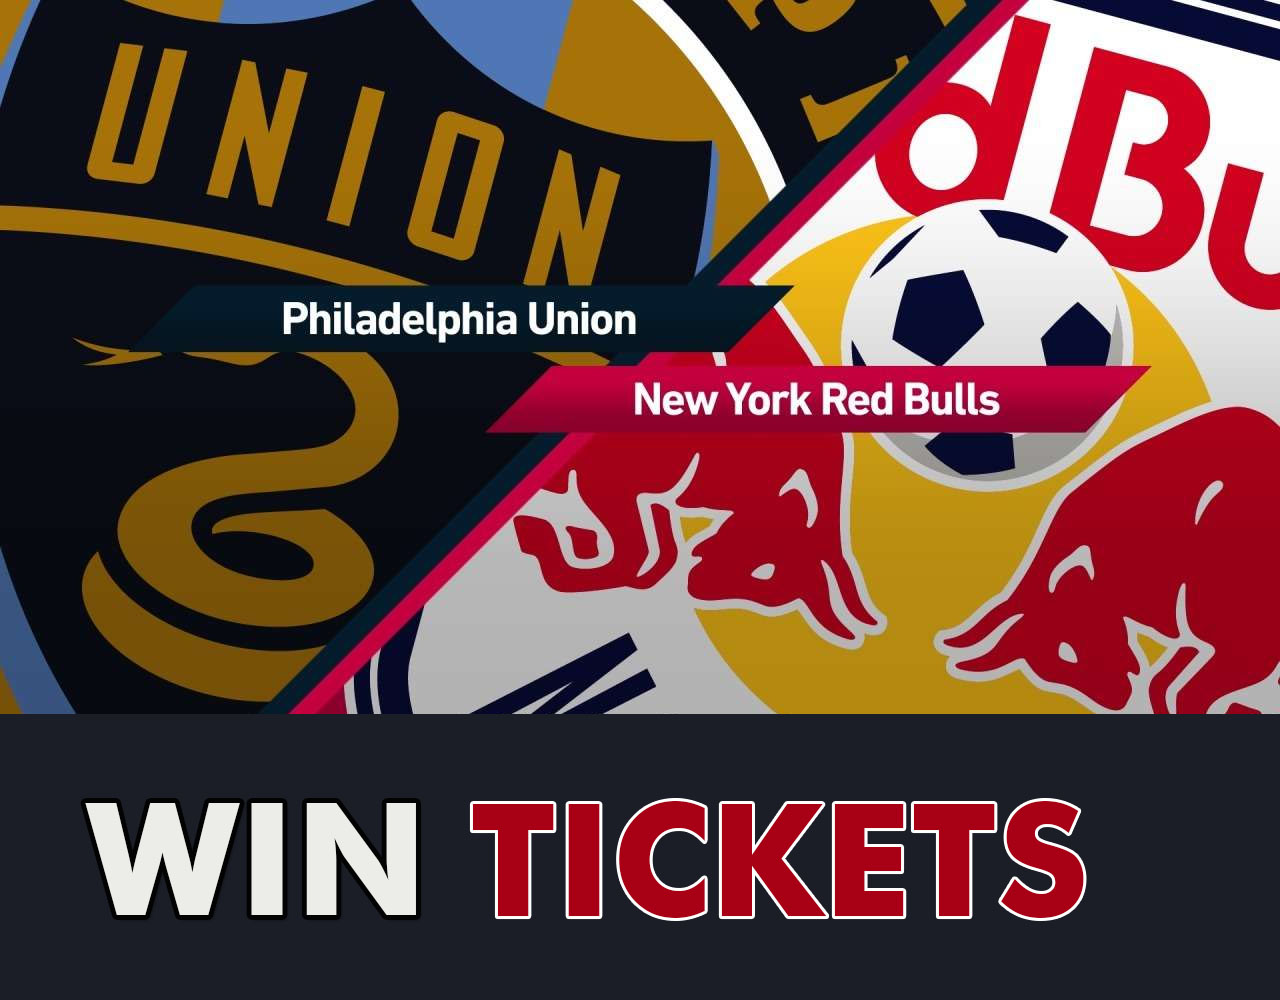 Win tickets for the New York Red Bulls vs. Philadelphia Union game!